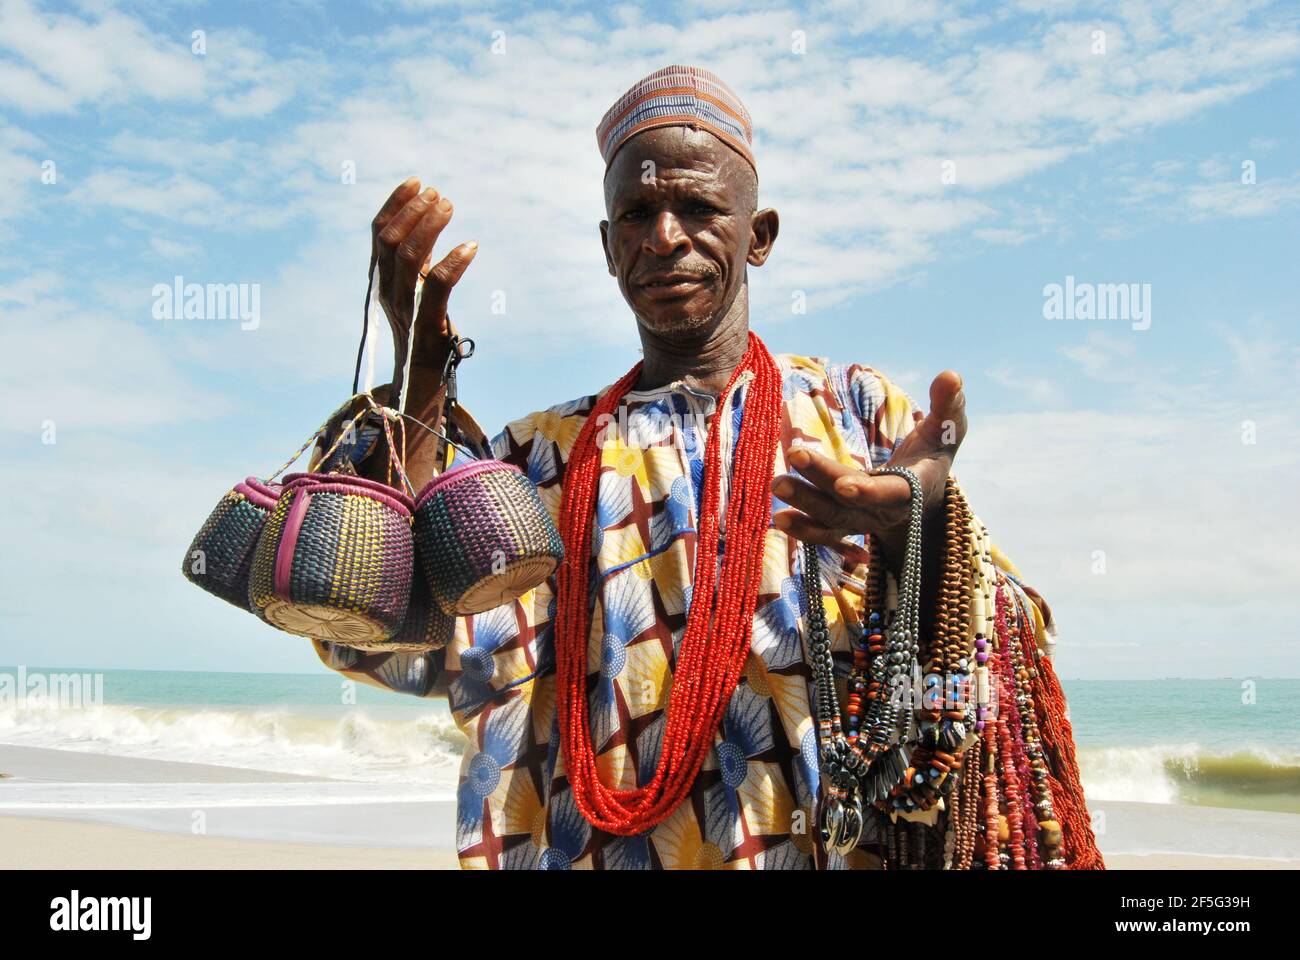 Man selling traditional beads at Lagos Bar Beach, Nigeria. Stock Photo